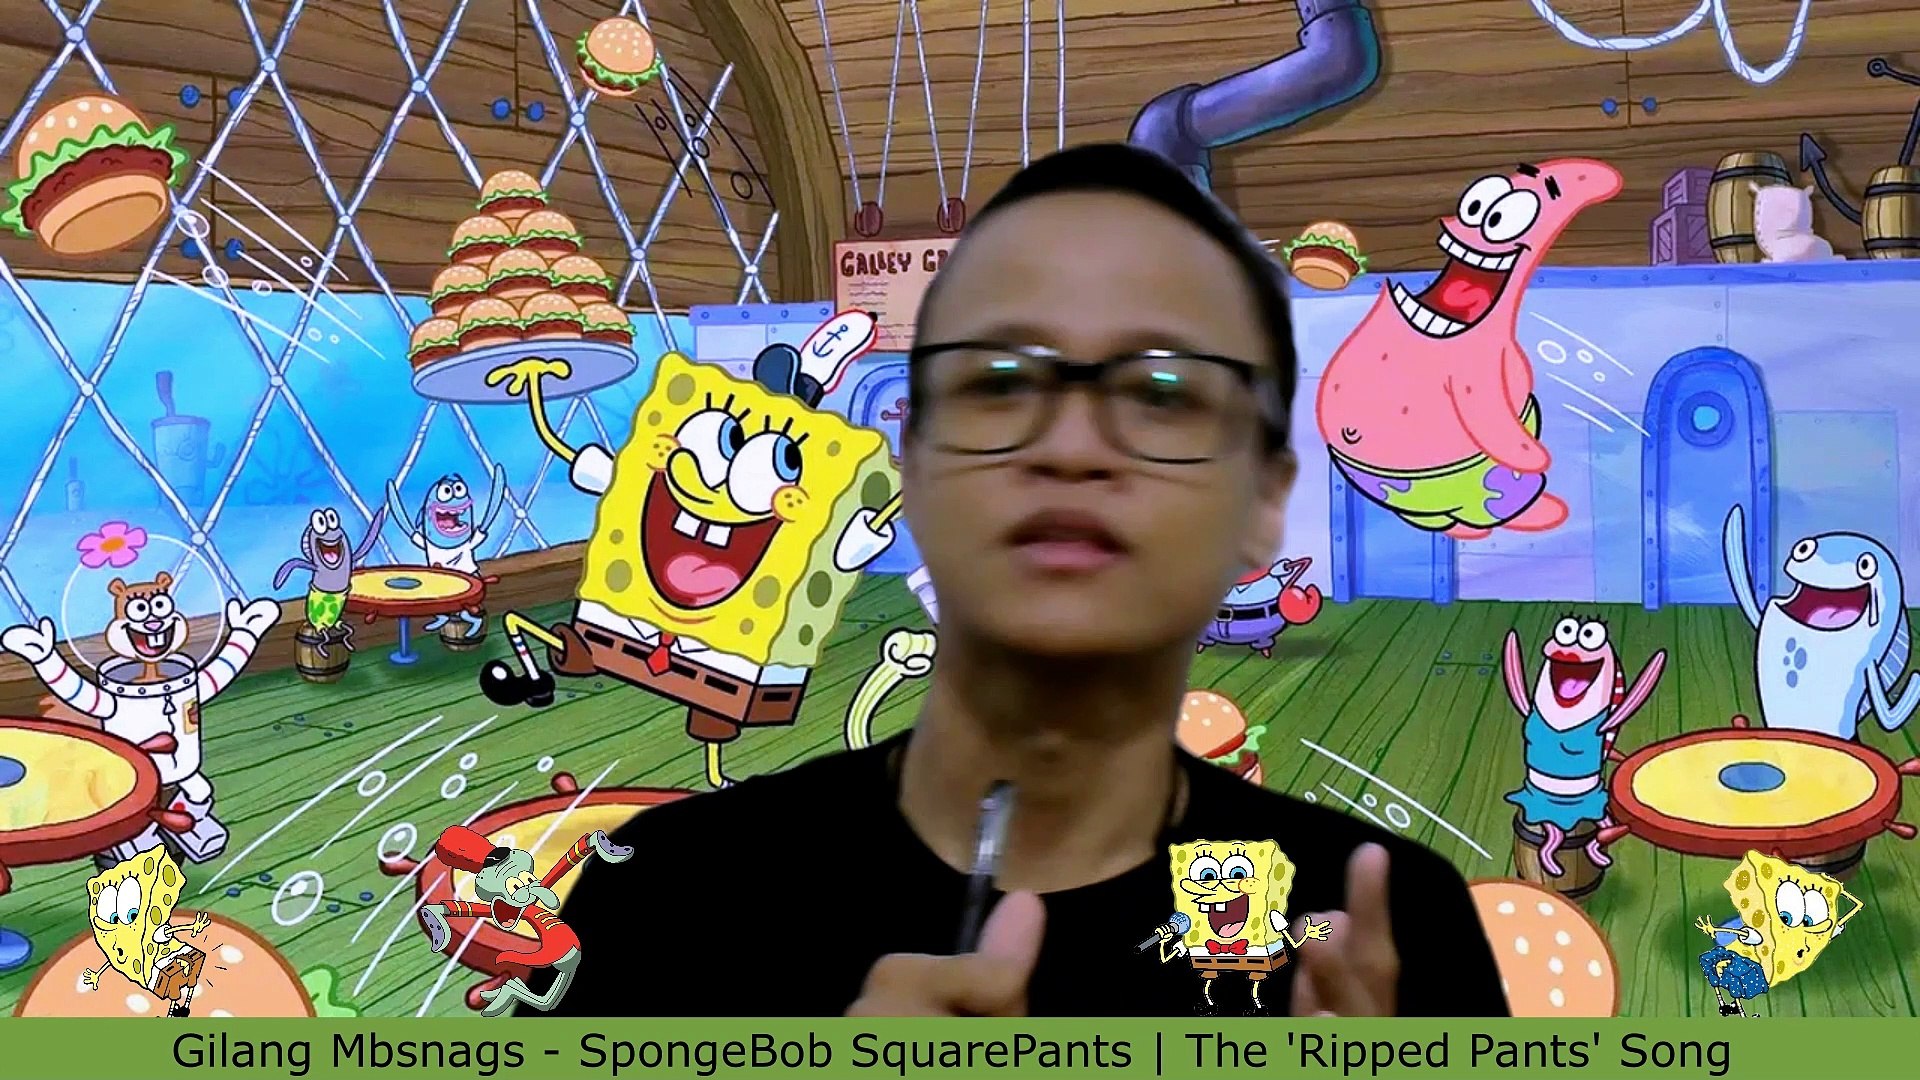 SpongeBob SquarePants, The 'Ripped Pants' Song